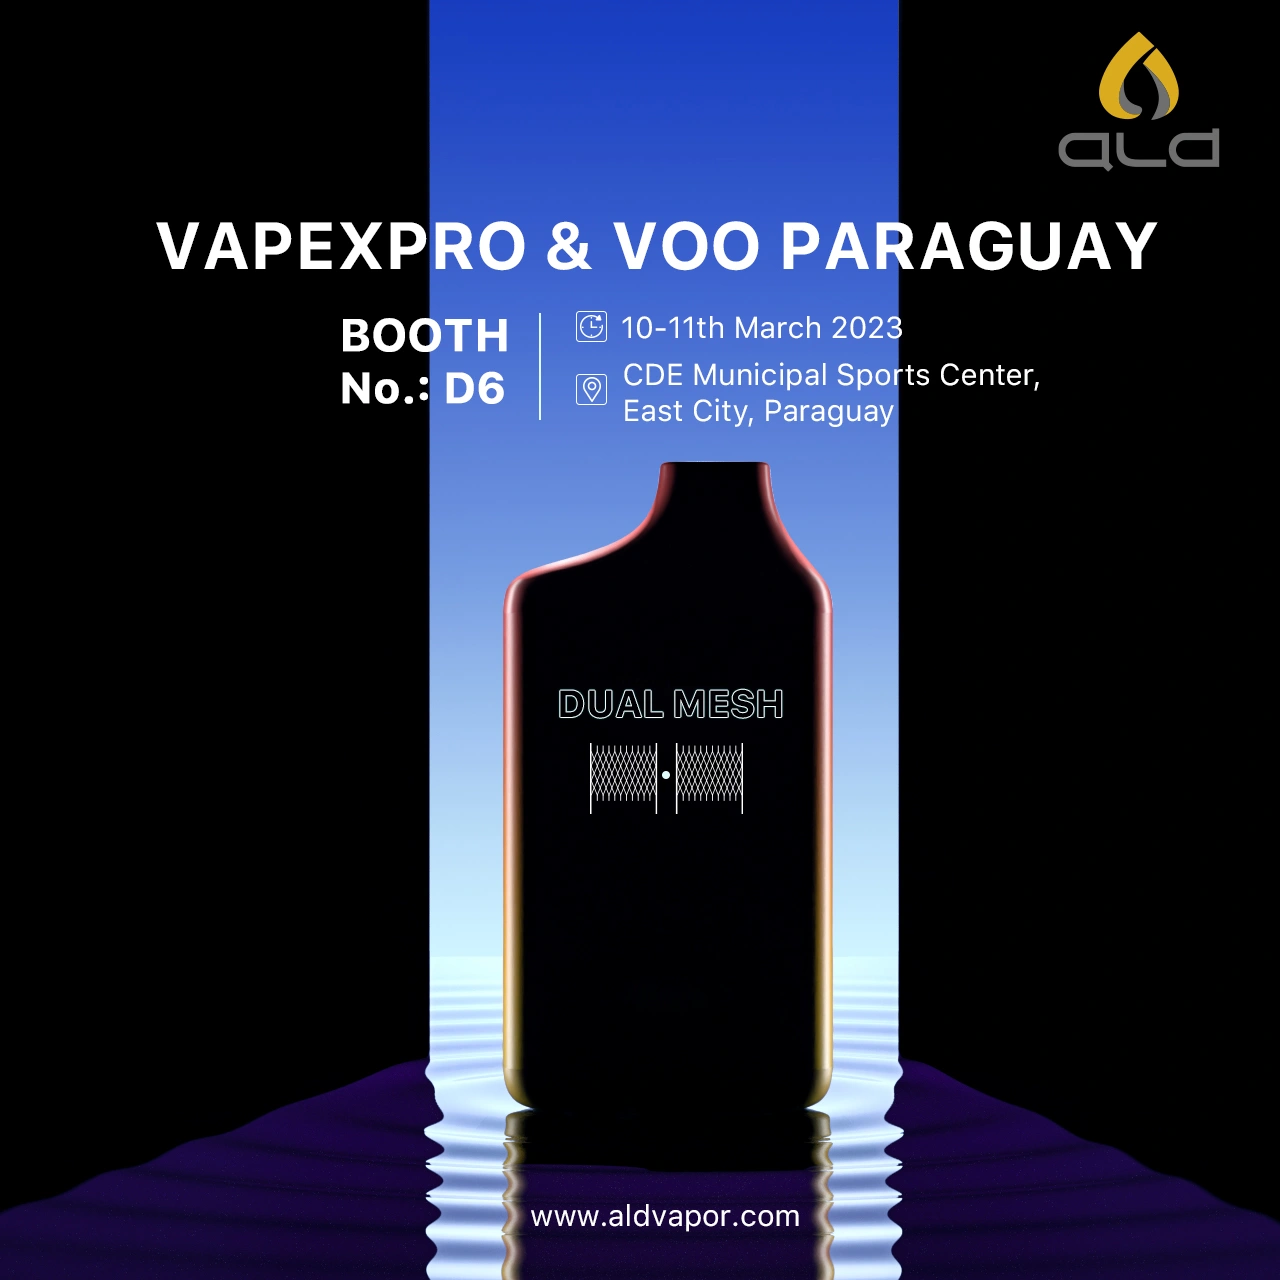 Vapexpro 2023 Paraguay Invitation card 